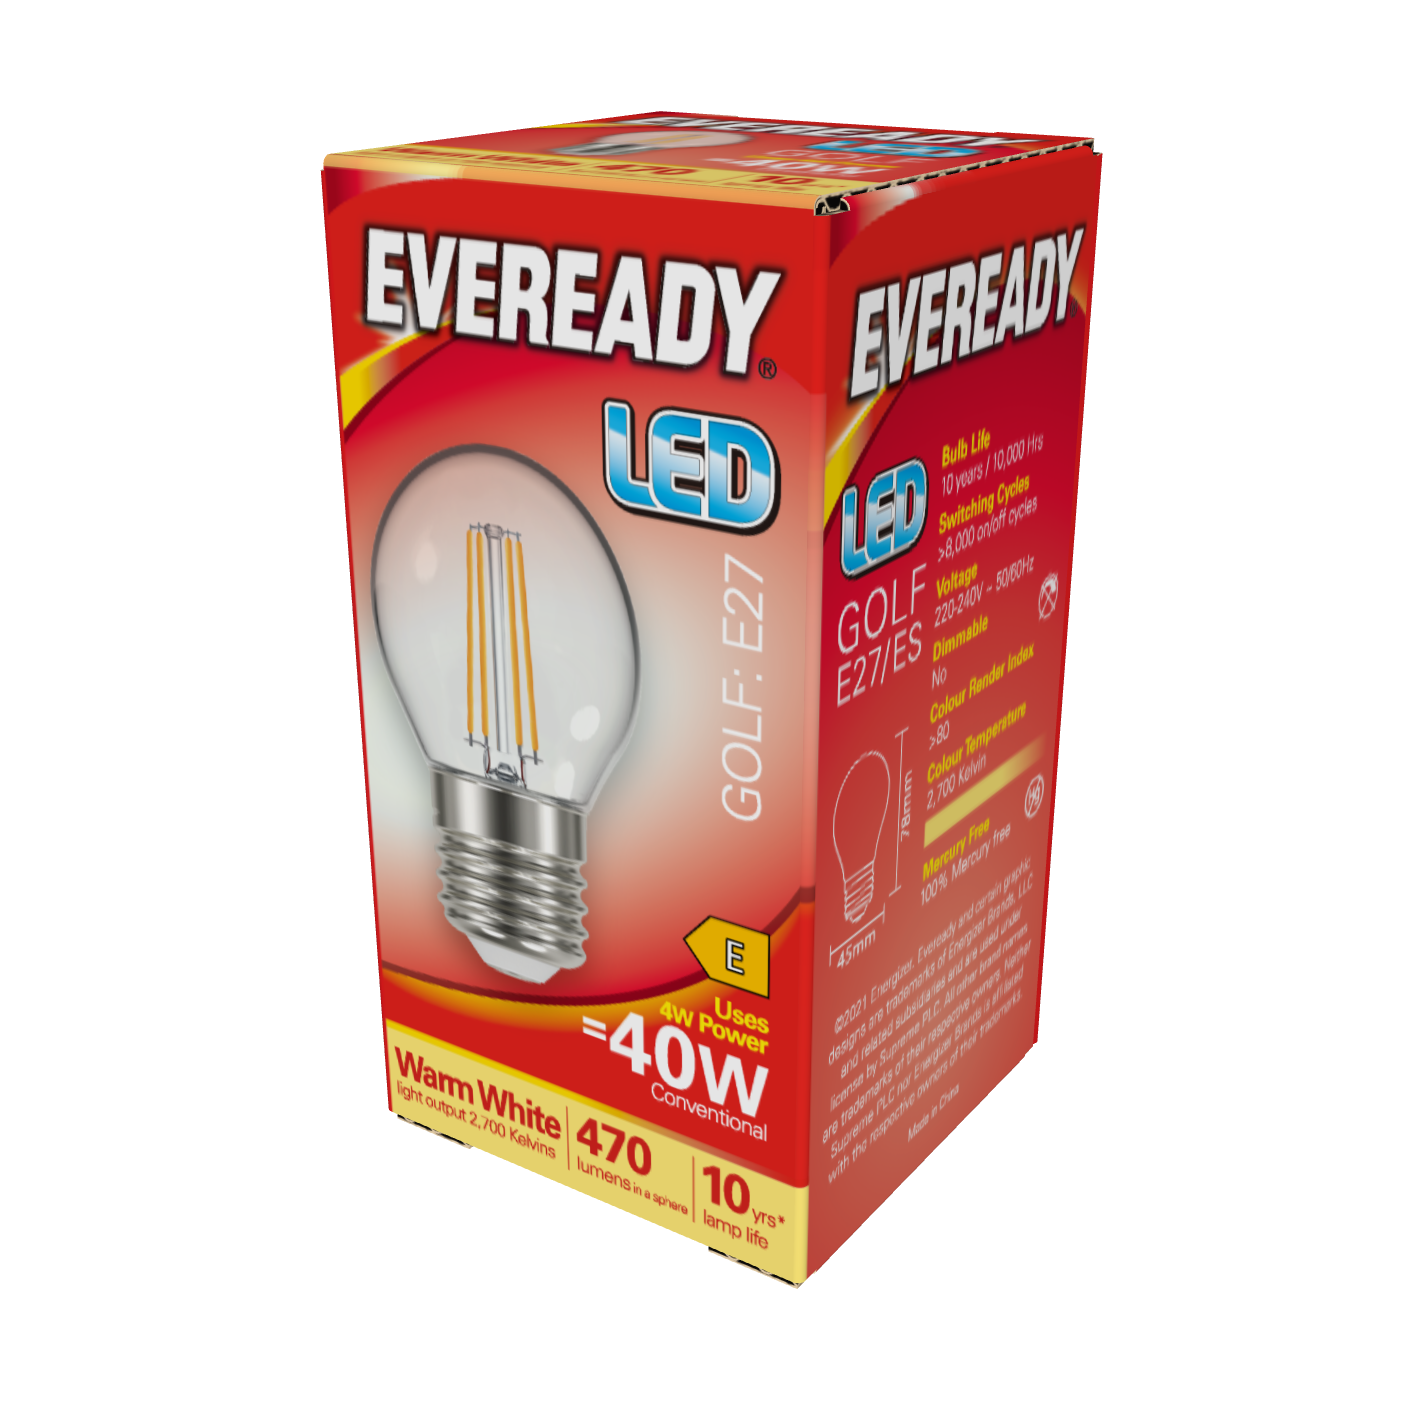 Eveready LED Filament Golf E27 (ES) 470lm 4W 2,700K (Warm White) Box of 1